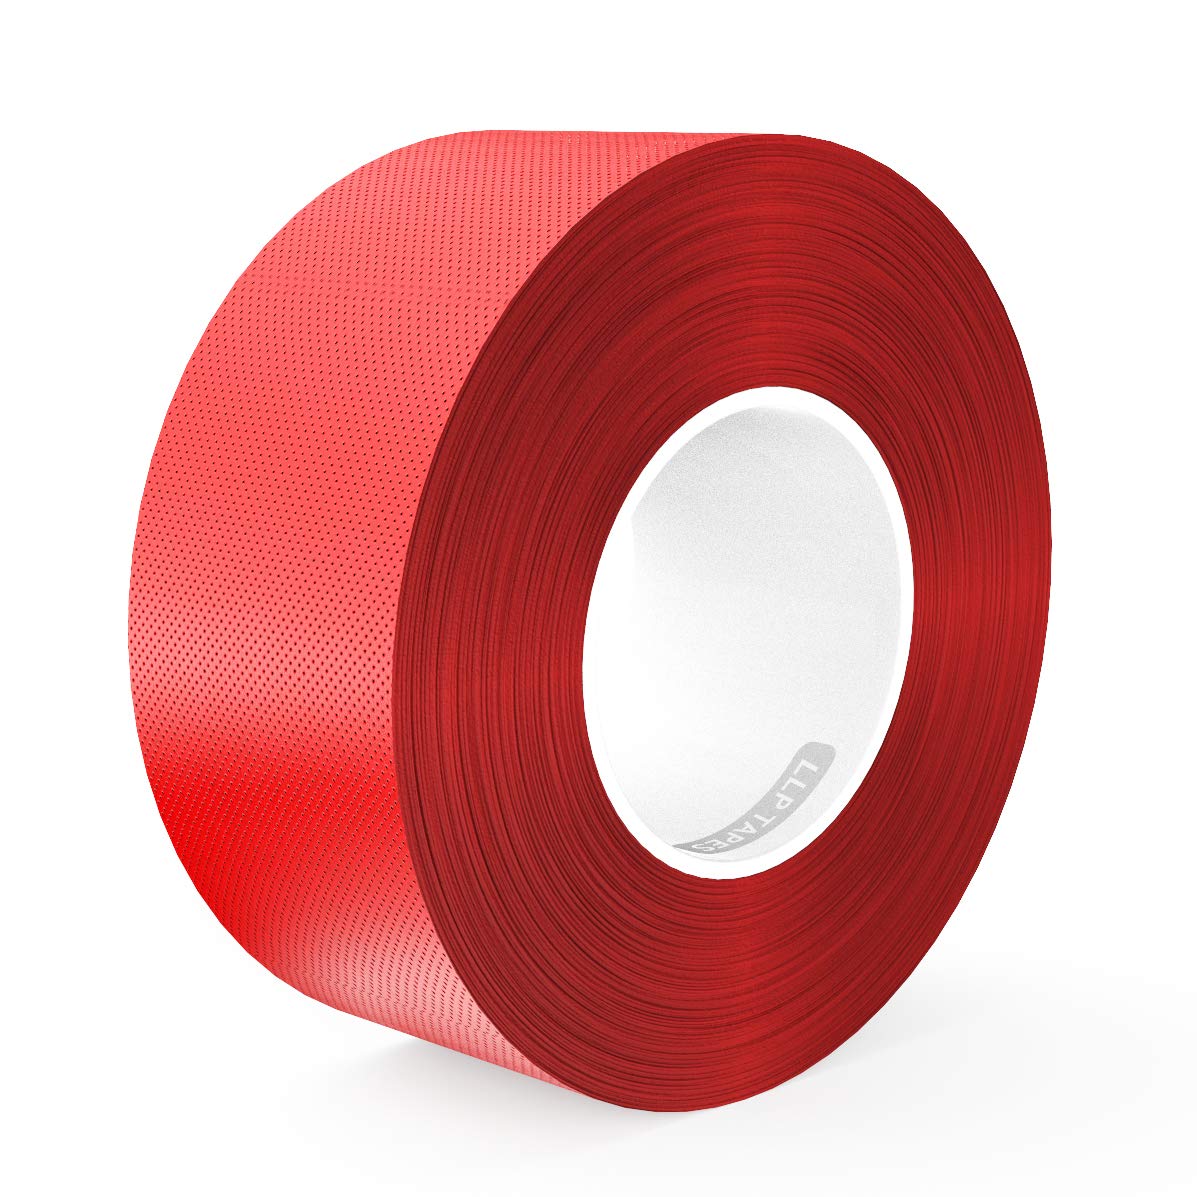  LLPT Duct Tape Premium Grade 2.36 Inches x 108 Feet x